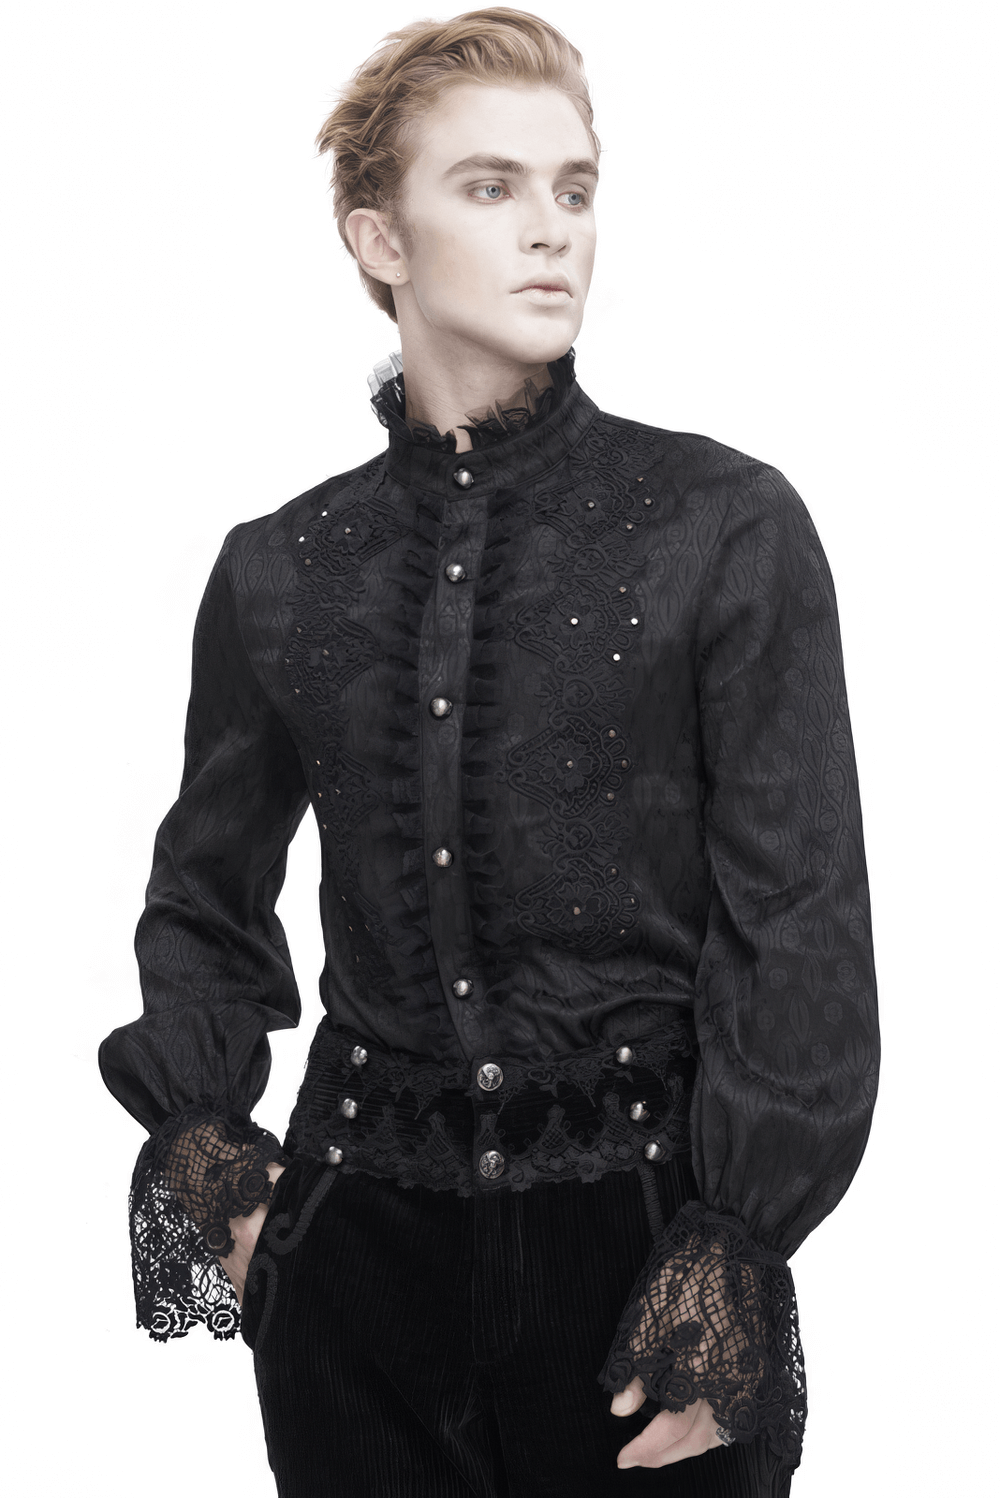 Elegant Victorian Lace-Trimmed High-Collar Black Shirt